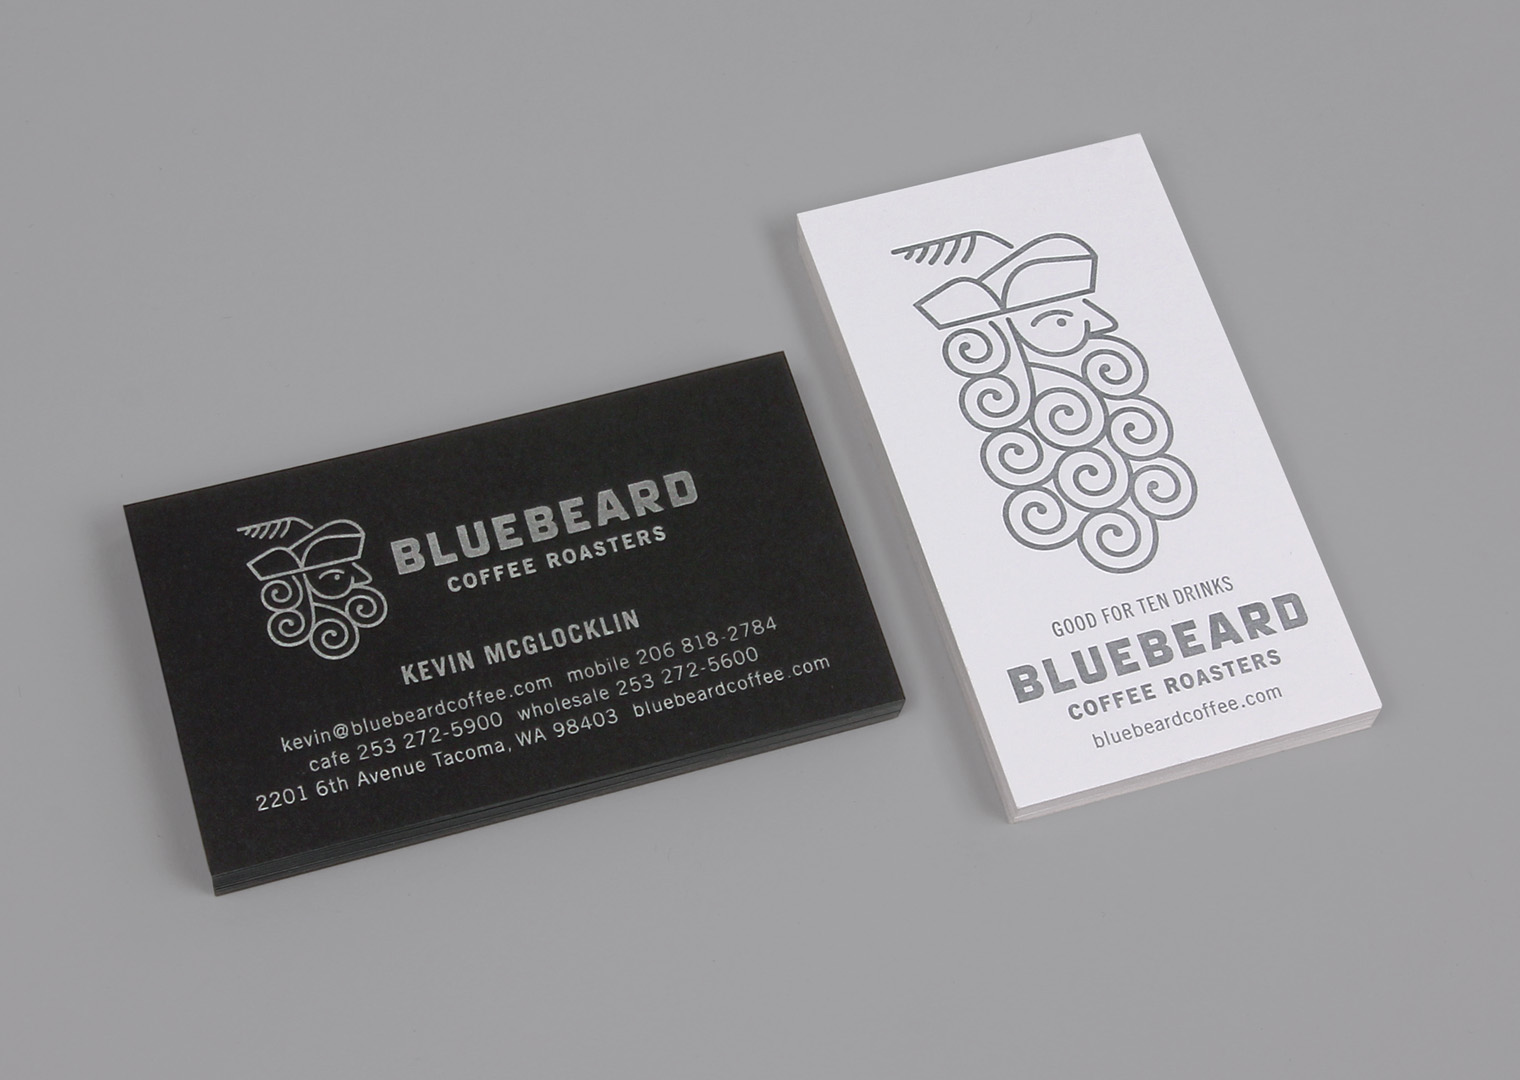 Bluebeard Coffee Roasters cards